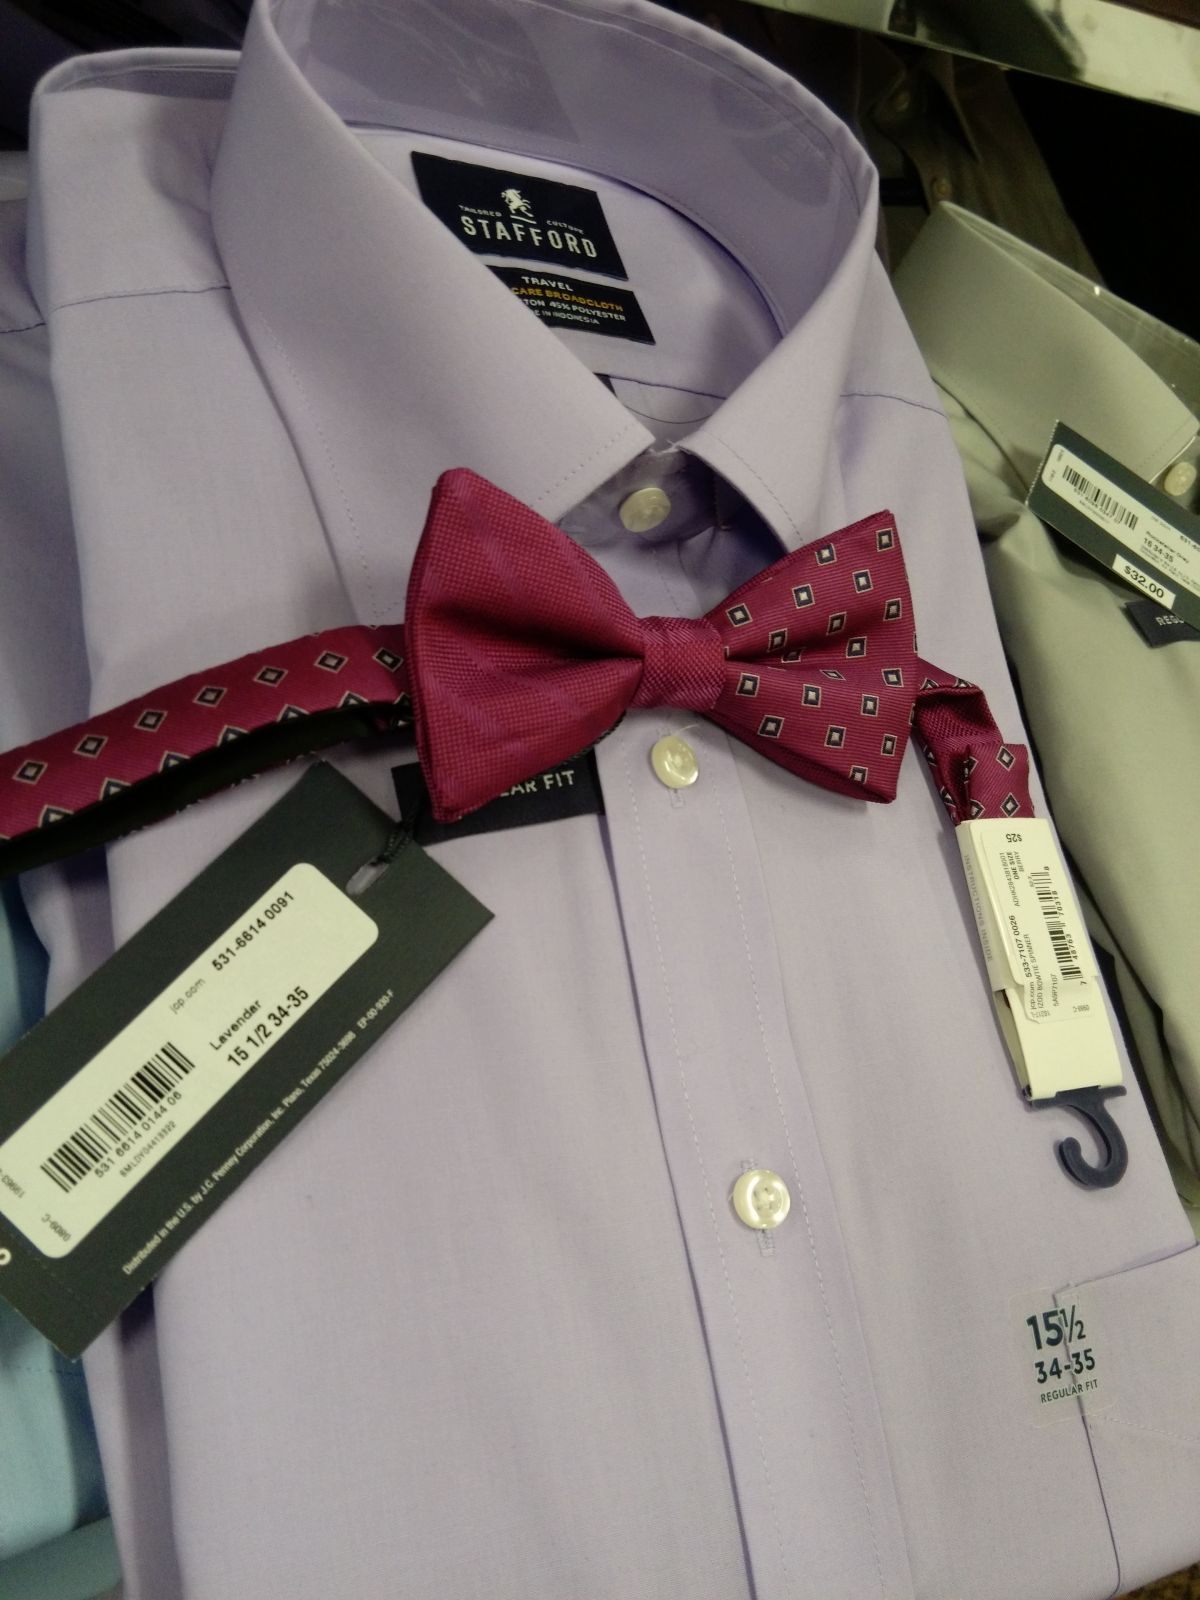 groomsman shirt & tie